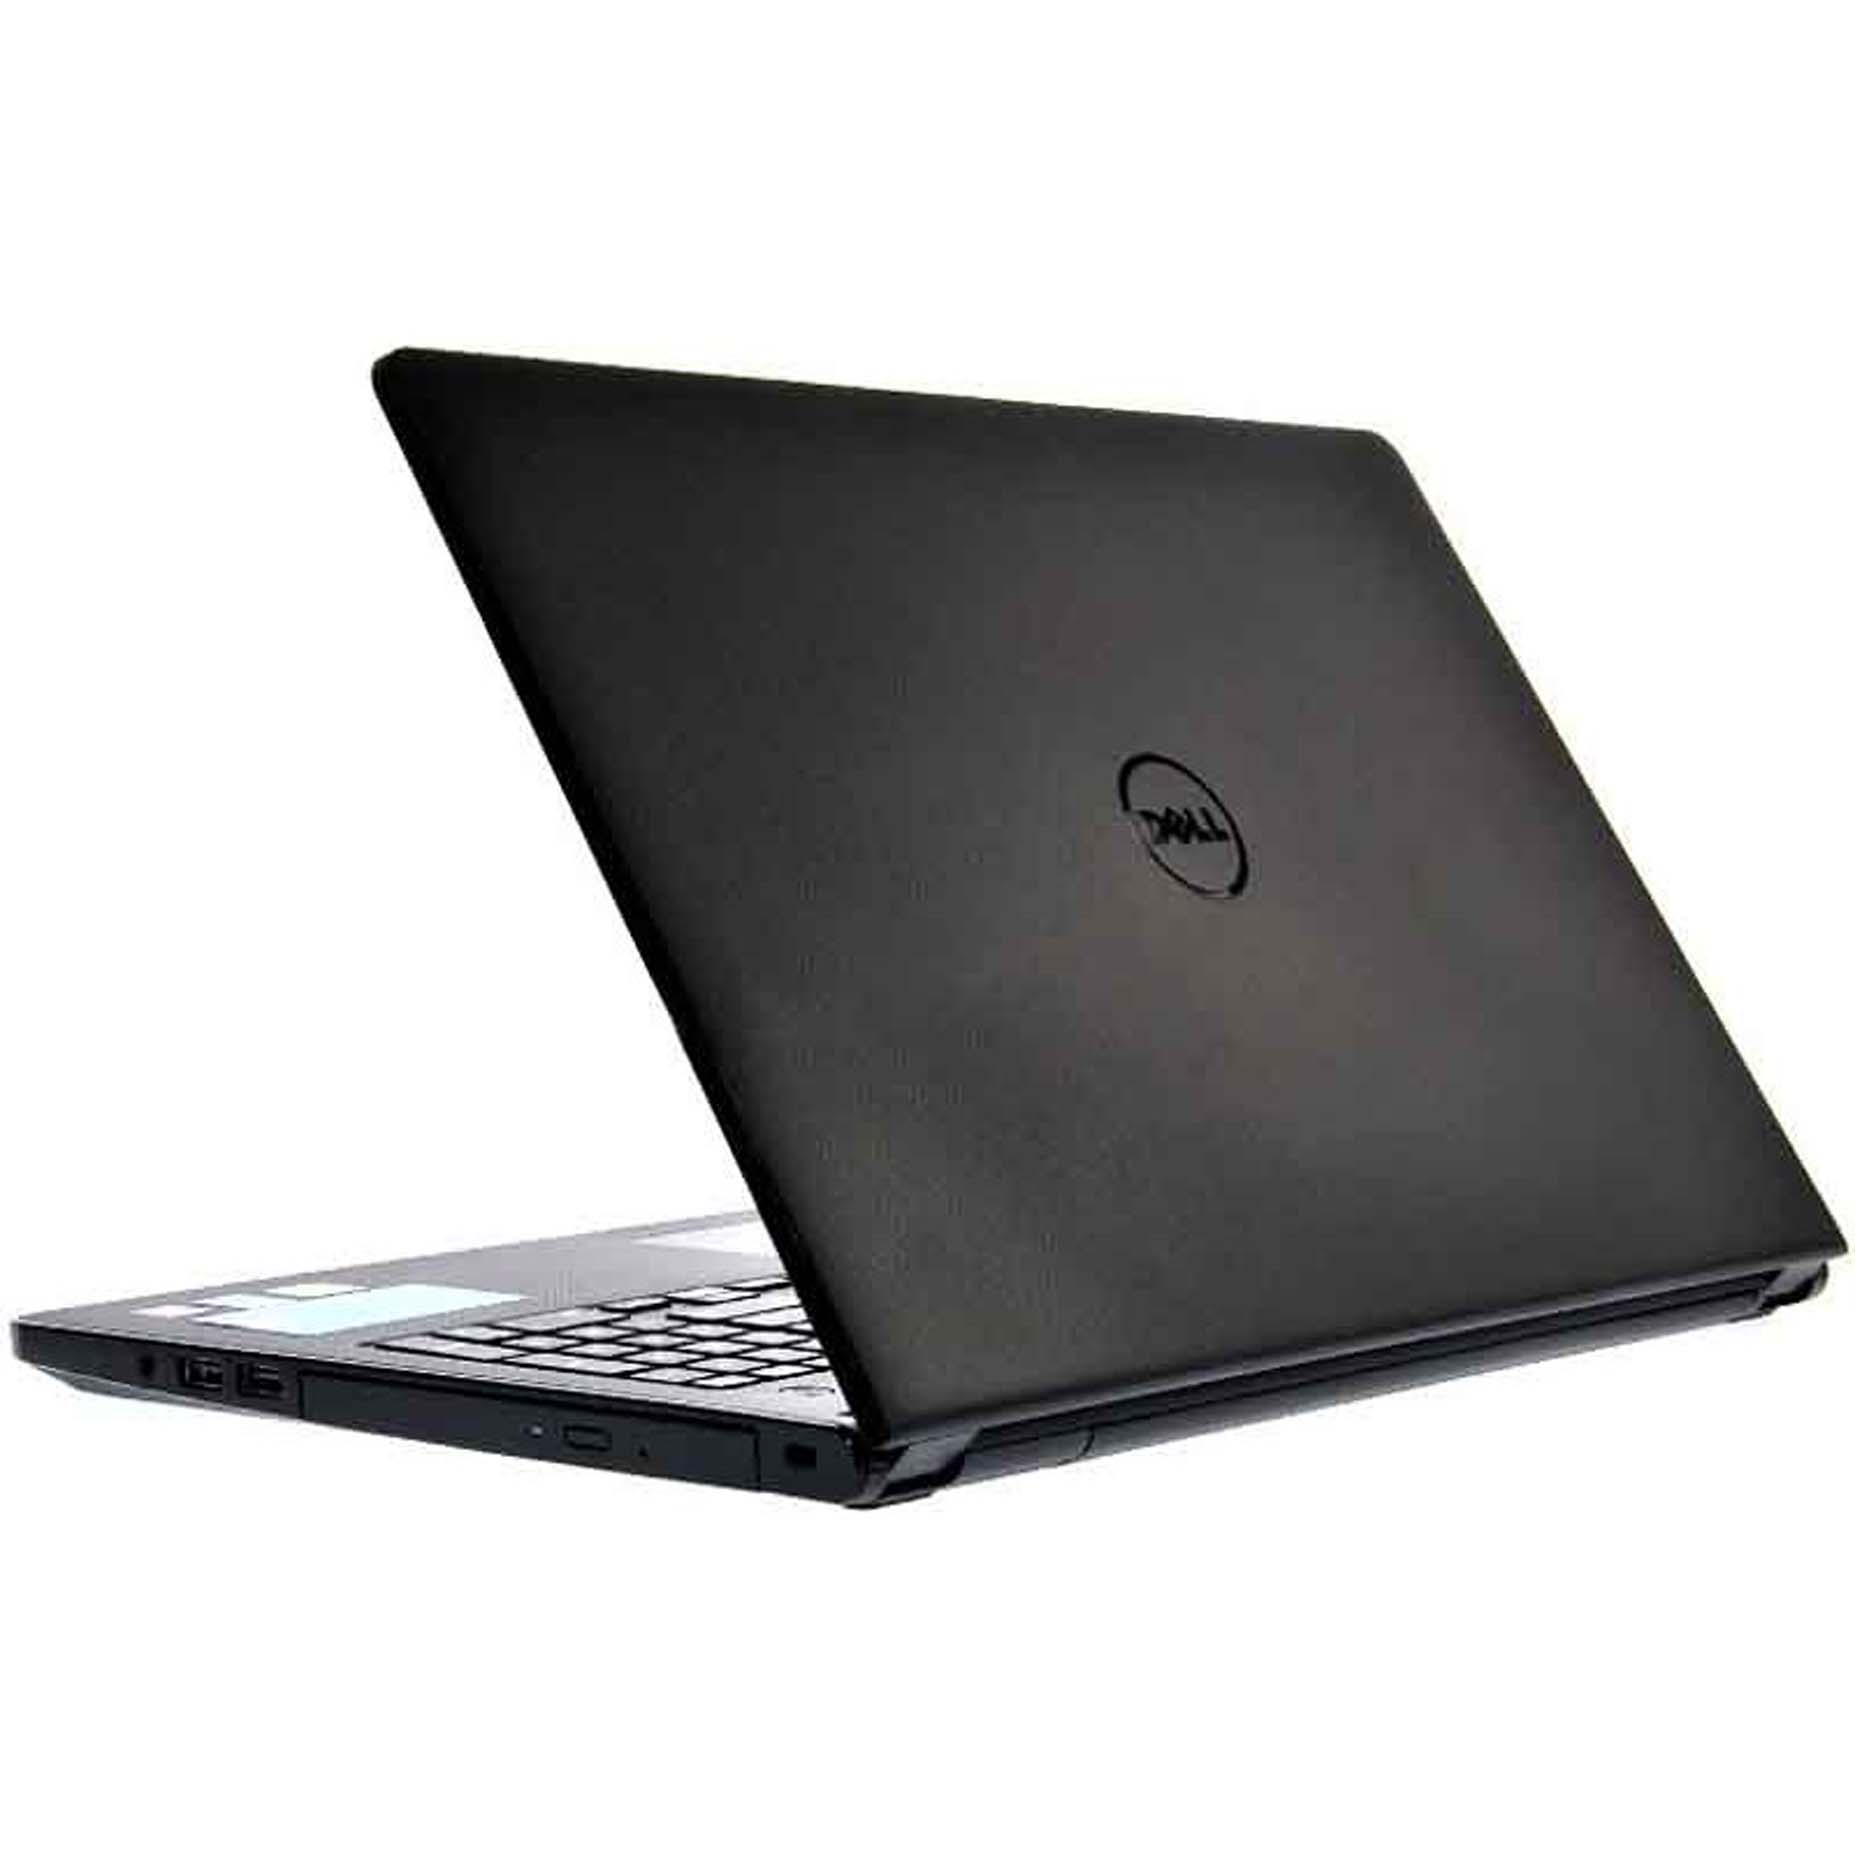 Harga Jual Laptop Dell Inspiron 15 3000 Series (3567)